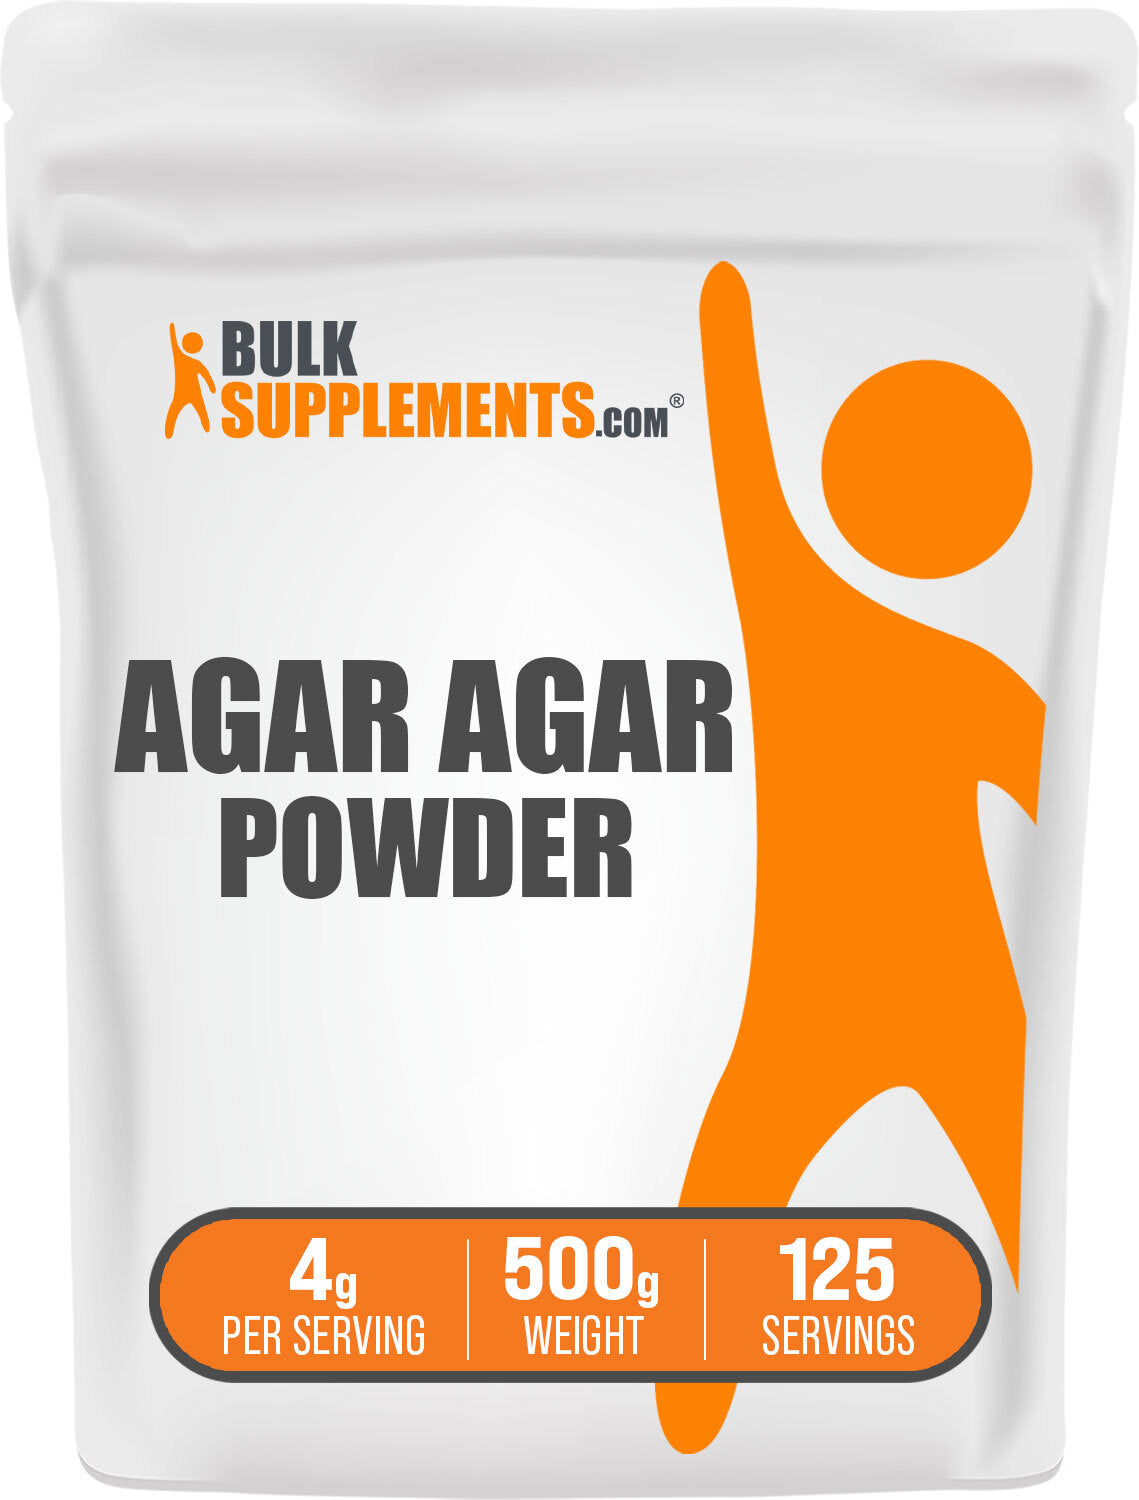 BulkSupplements.com Agar Agar Powder 500g Bag